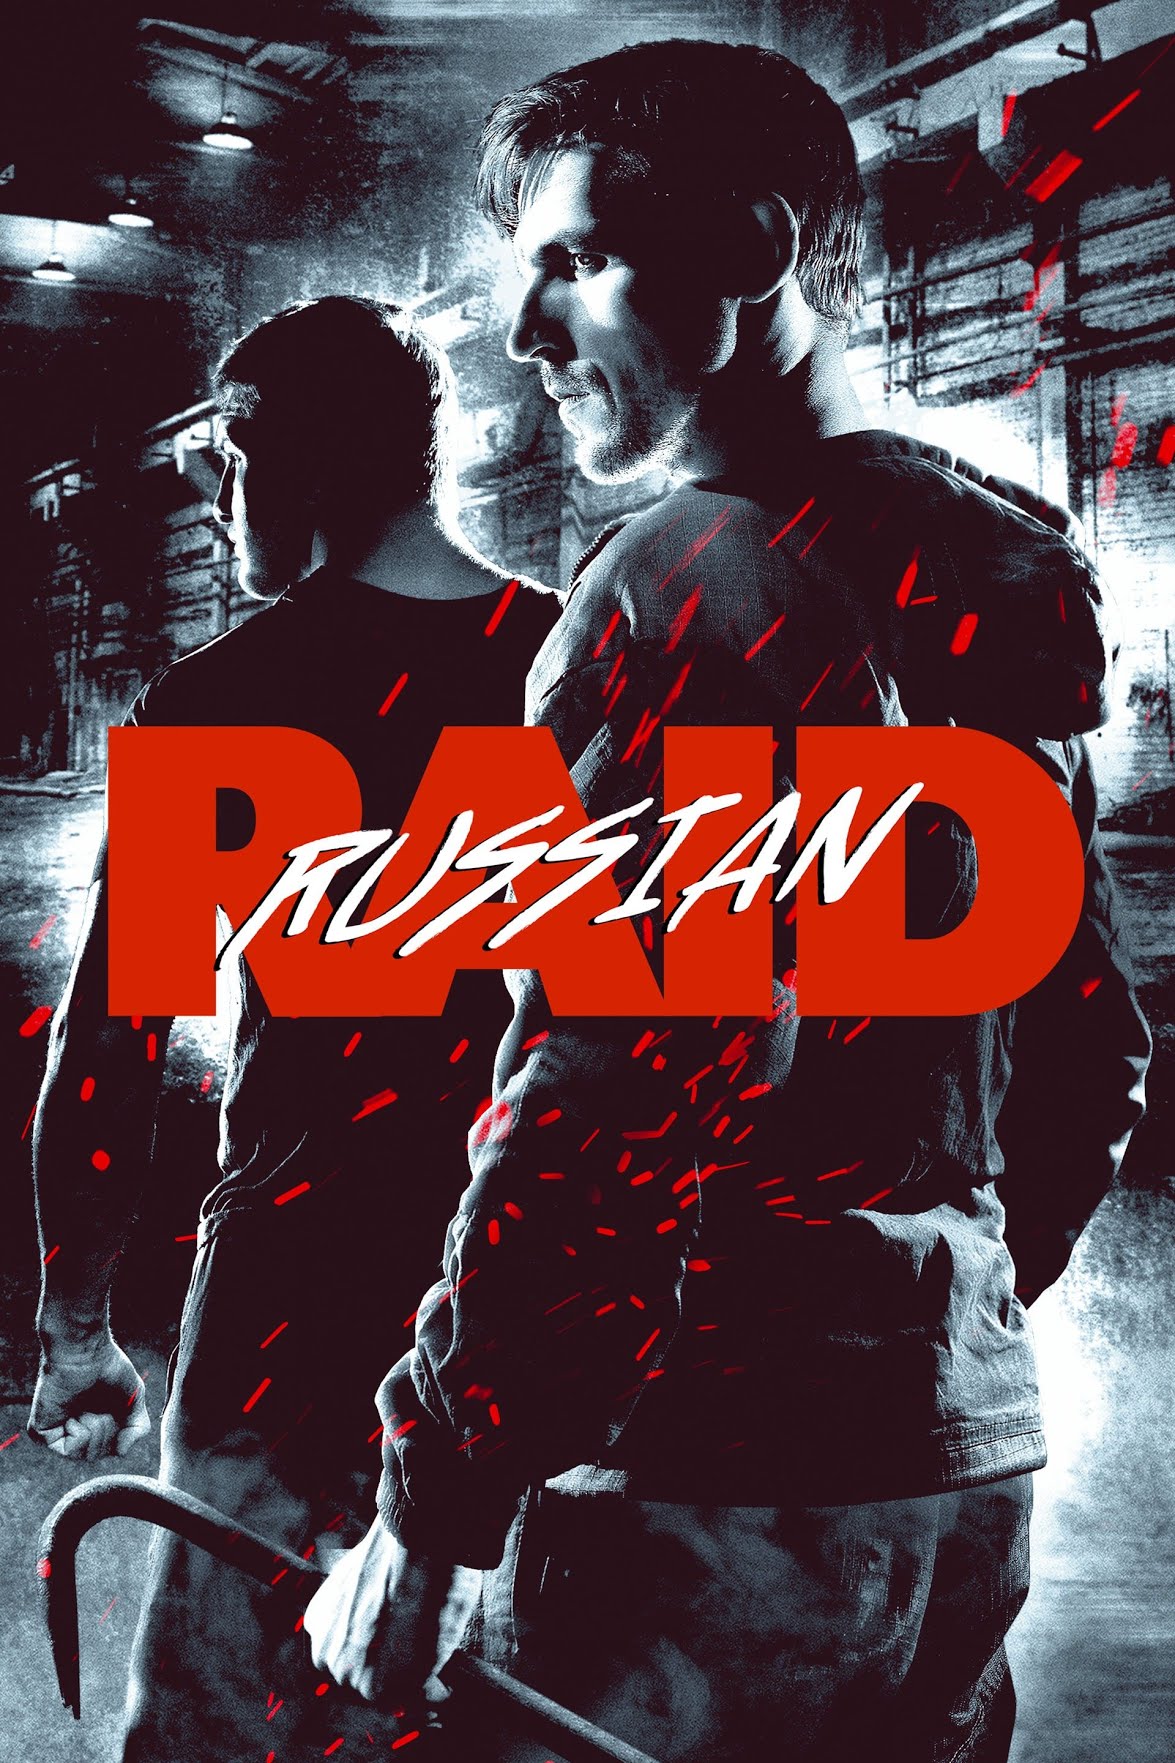 [MINI-HD] Russkiy Reyd (Russian Raid) (2020) ฉะ อัด ซัดไม่เลี้ยง [1080p] [พากย์ไทย 2.0 + เสียงรัสเซีย 5.1] [บรรยายไทย + อังกฤษ] [เสียงไทย + ซับไทย] [USERLOAD]